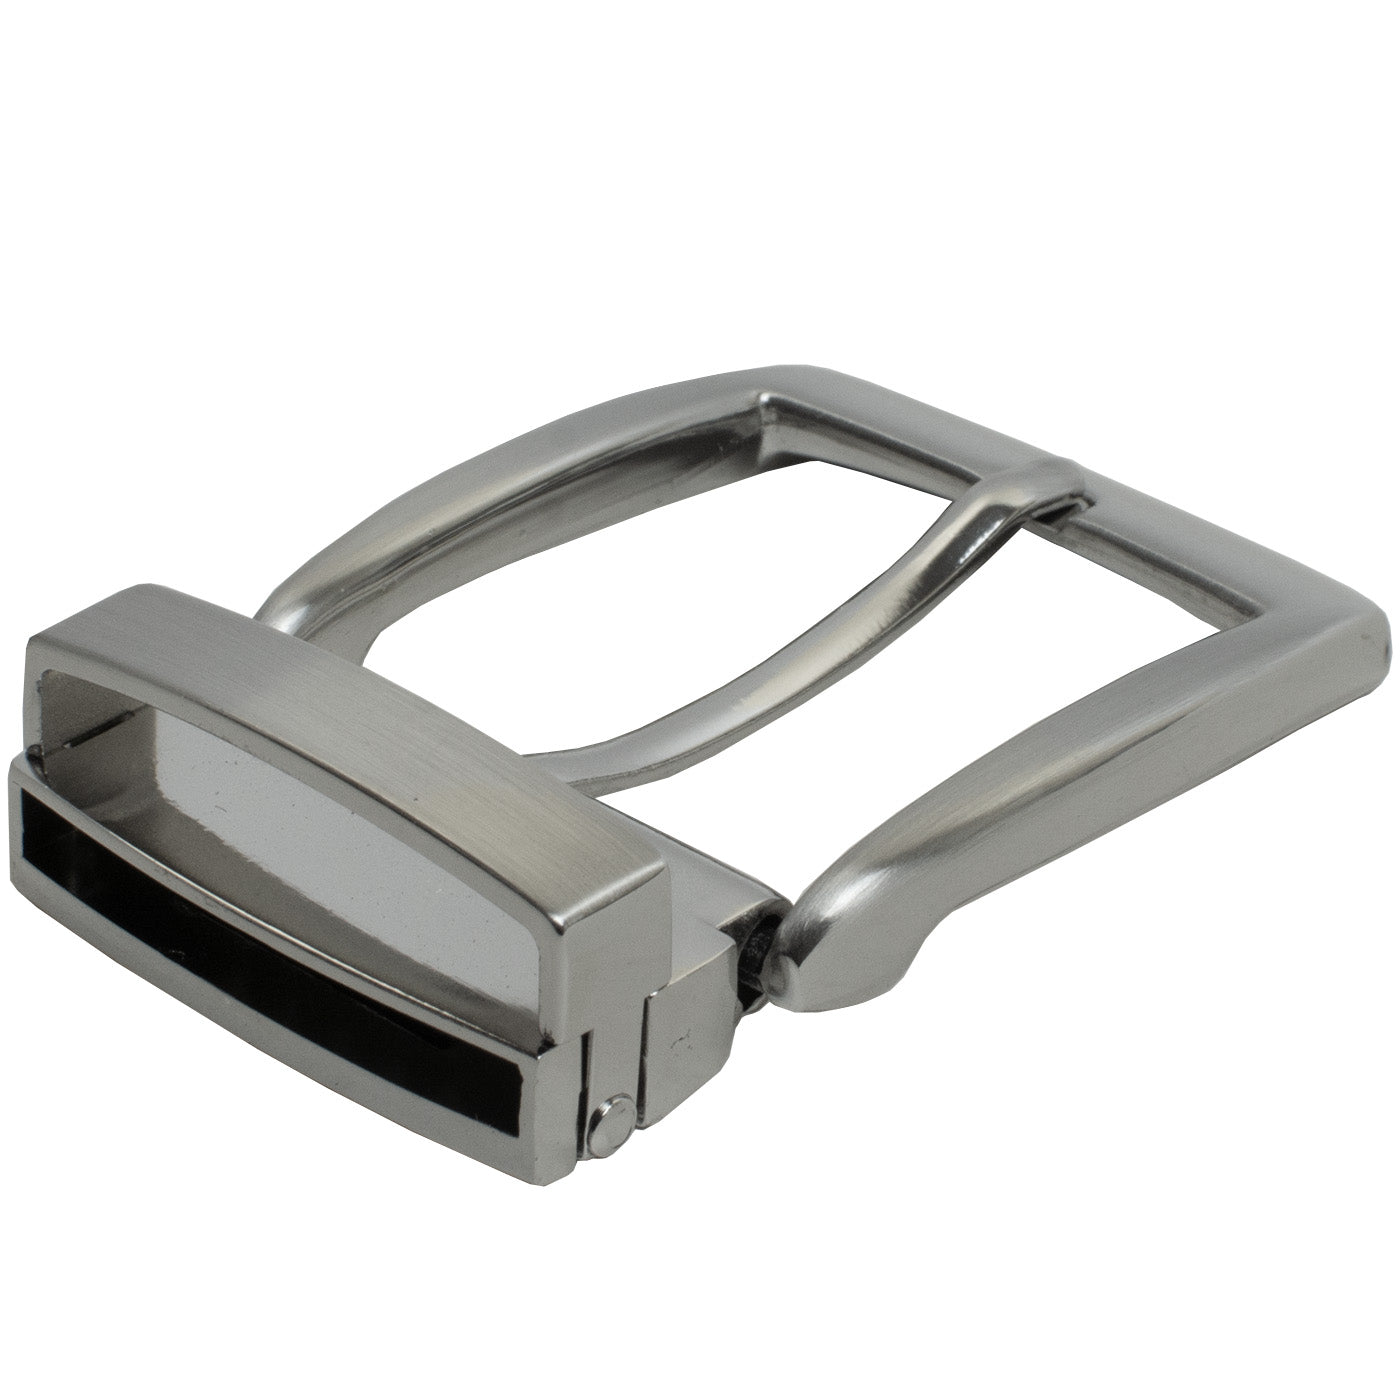 Single Prong Metal Belt Buckle Replacement buckle for belt fits  1-3/8(35mm) Belt Strap